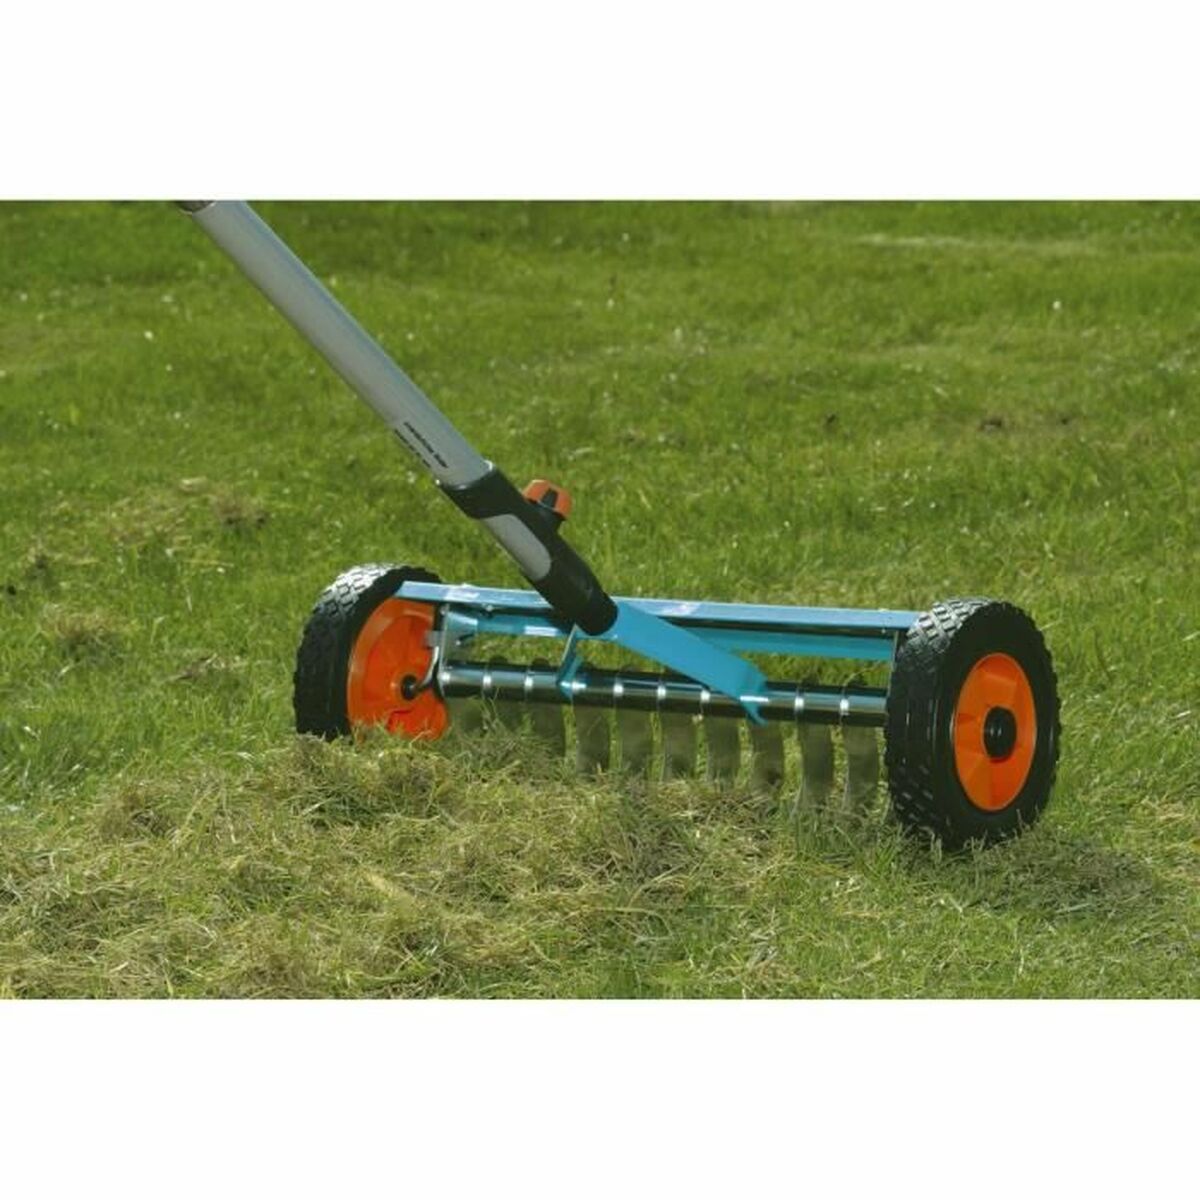 Lawn scarifier Gardena 3395-20 1 Unit